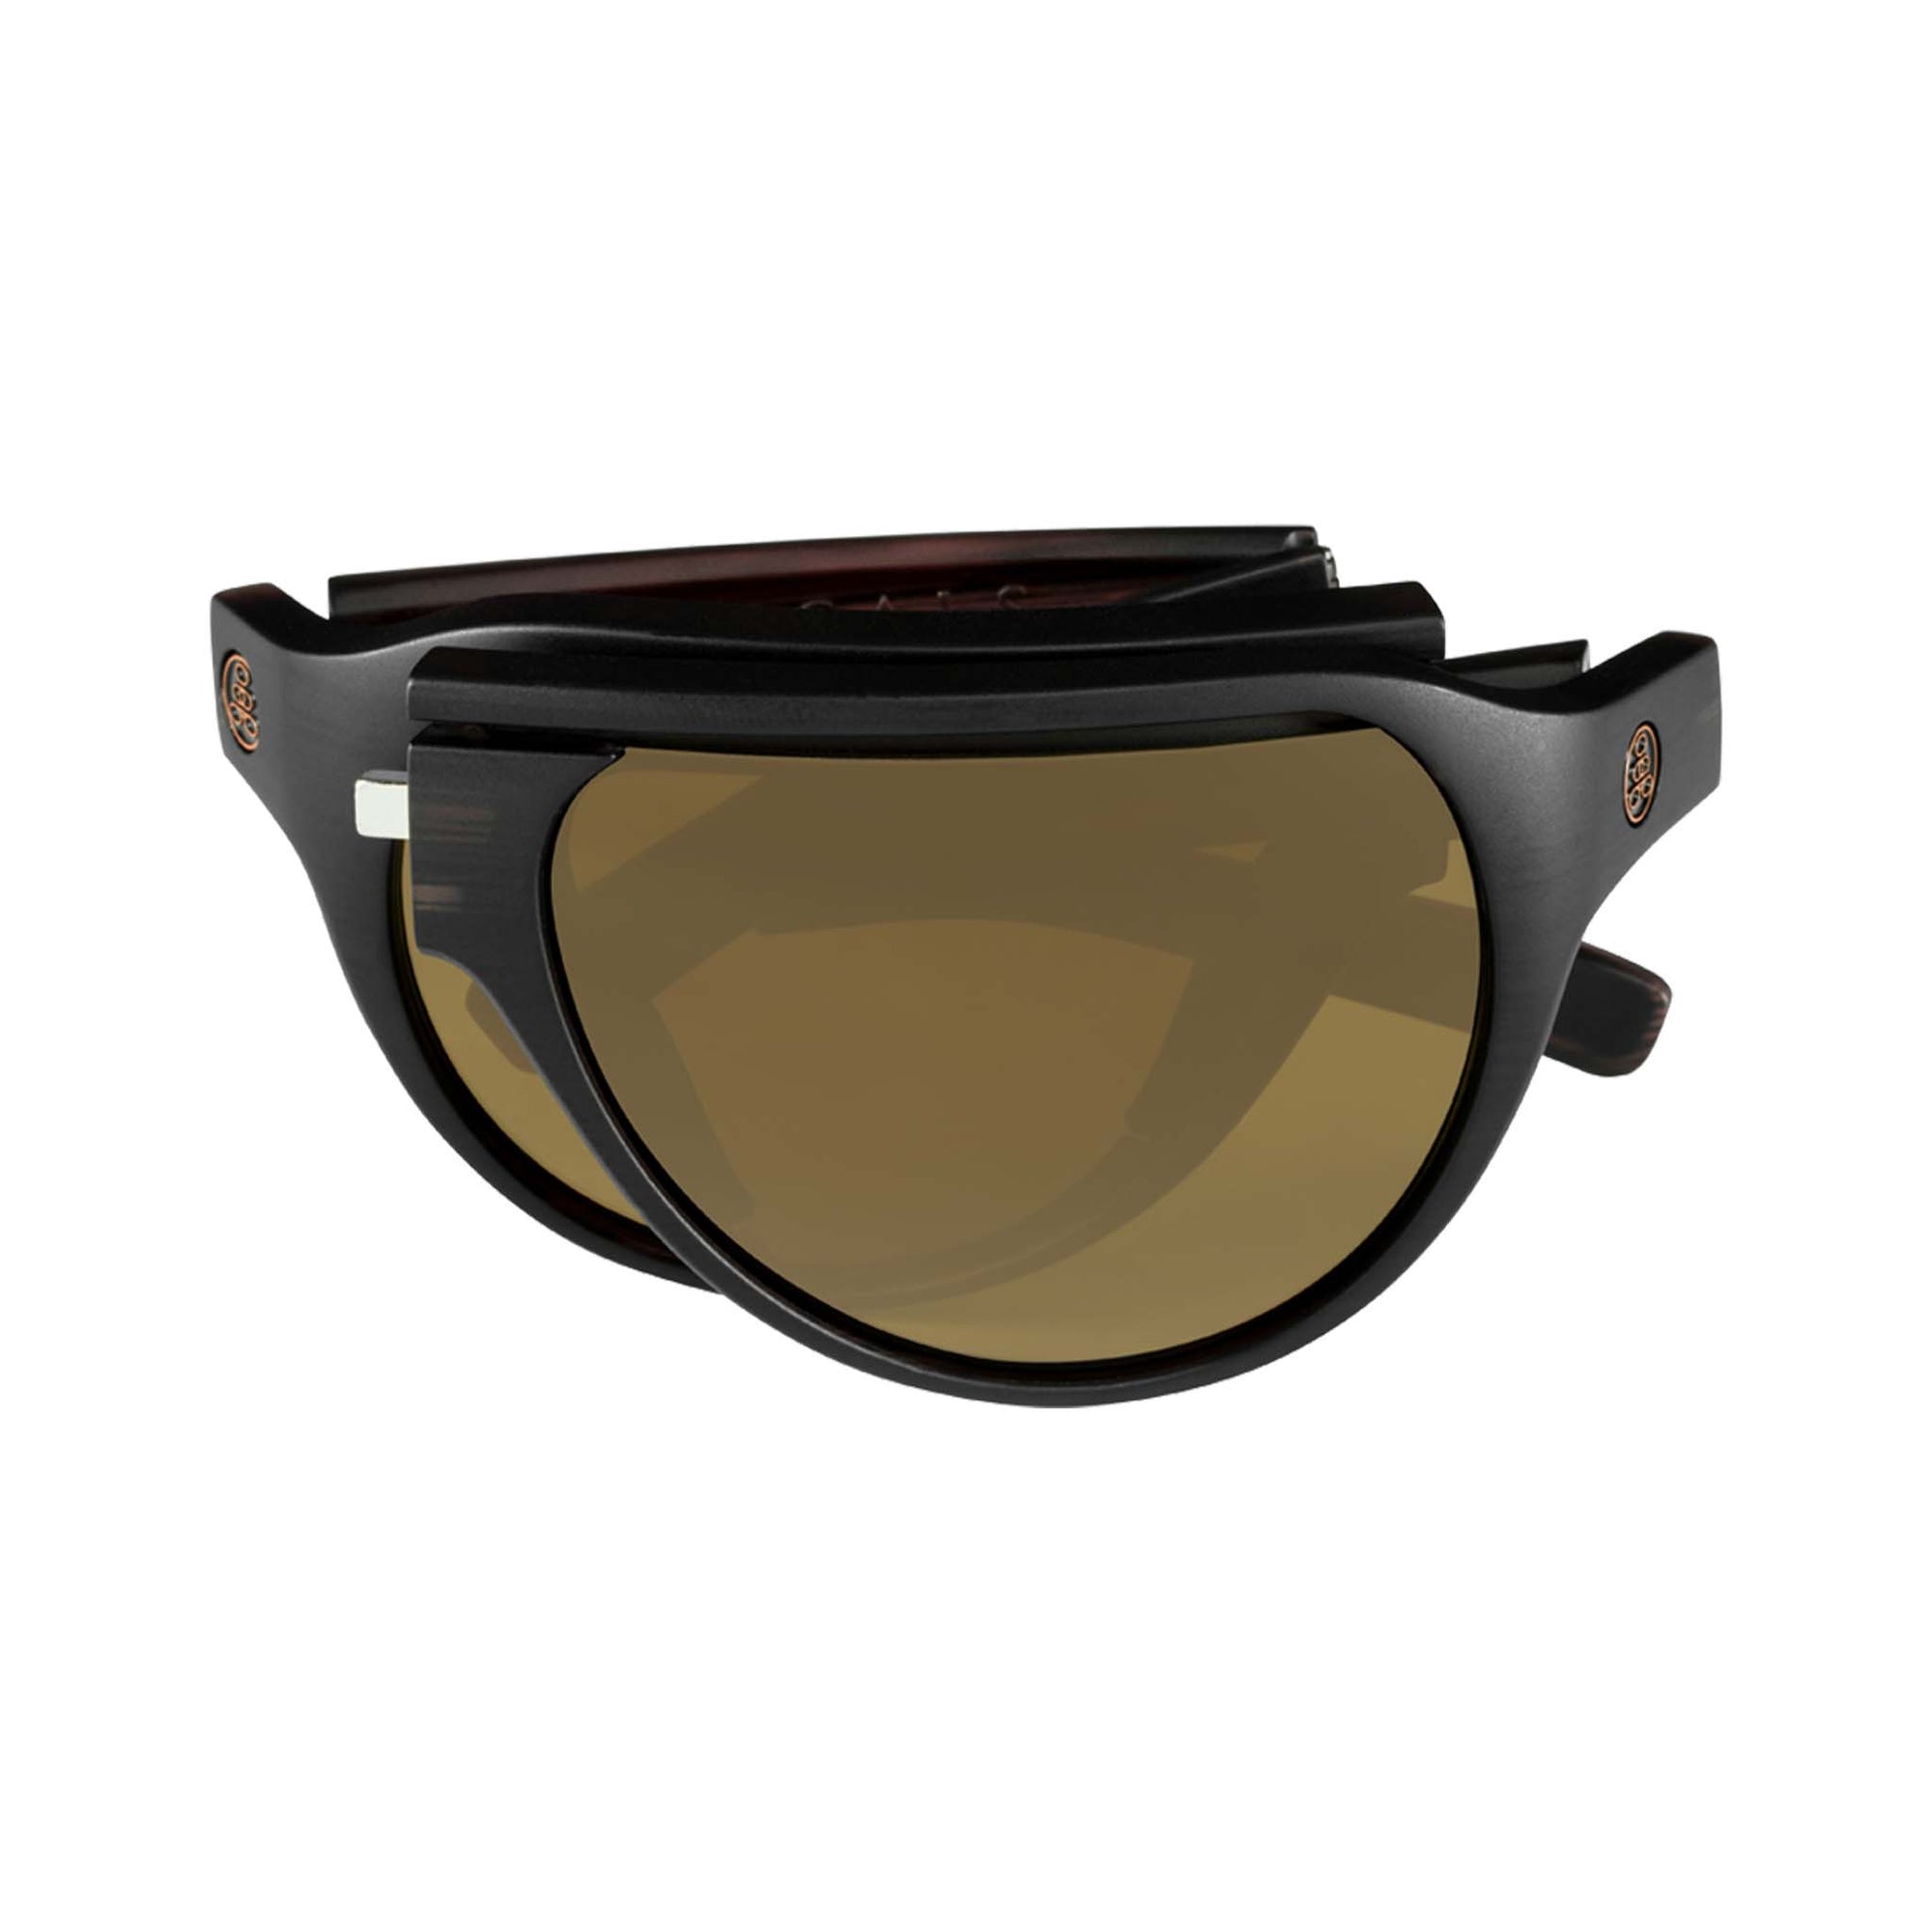 Popticals, Premium Compact Sunglasses, PopAir, 300010-DUNP, Polarized Sunglasses, Matte Driftwood Frame, Brown Lenses, Compact View